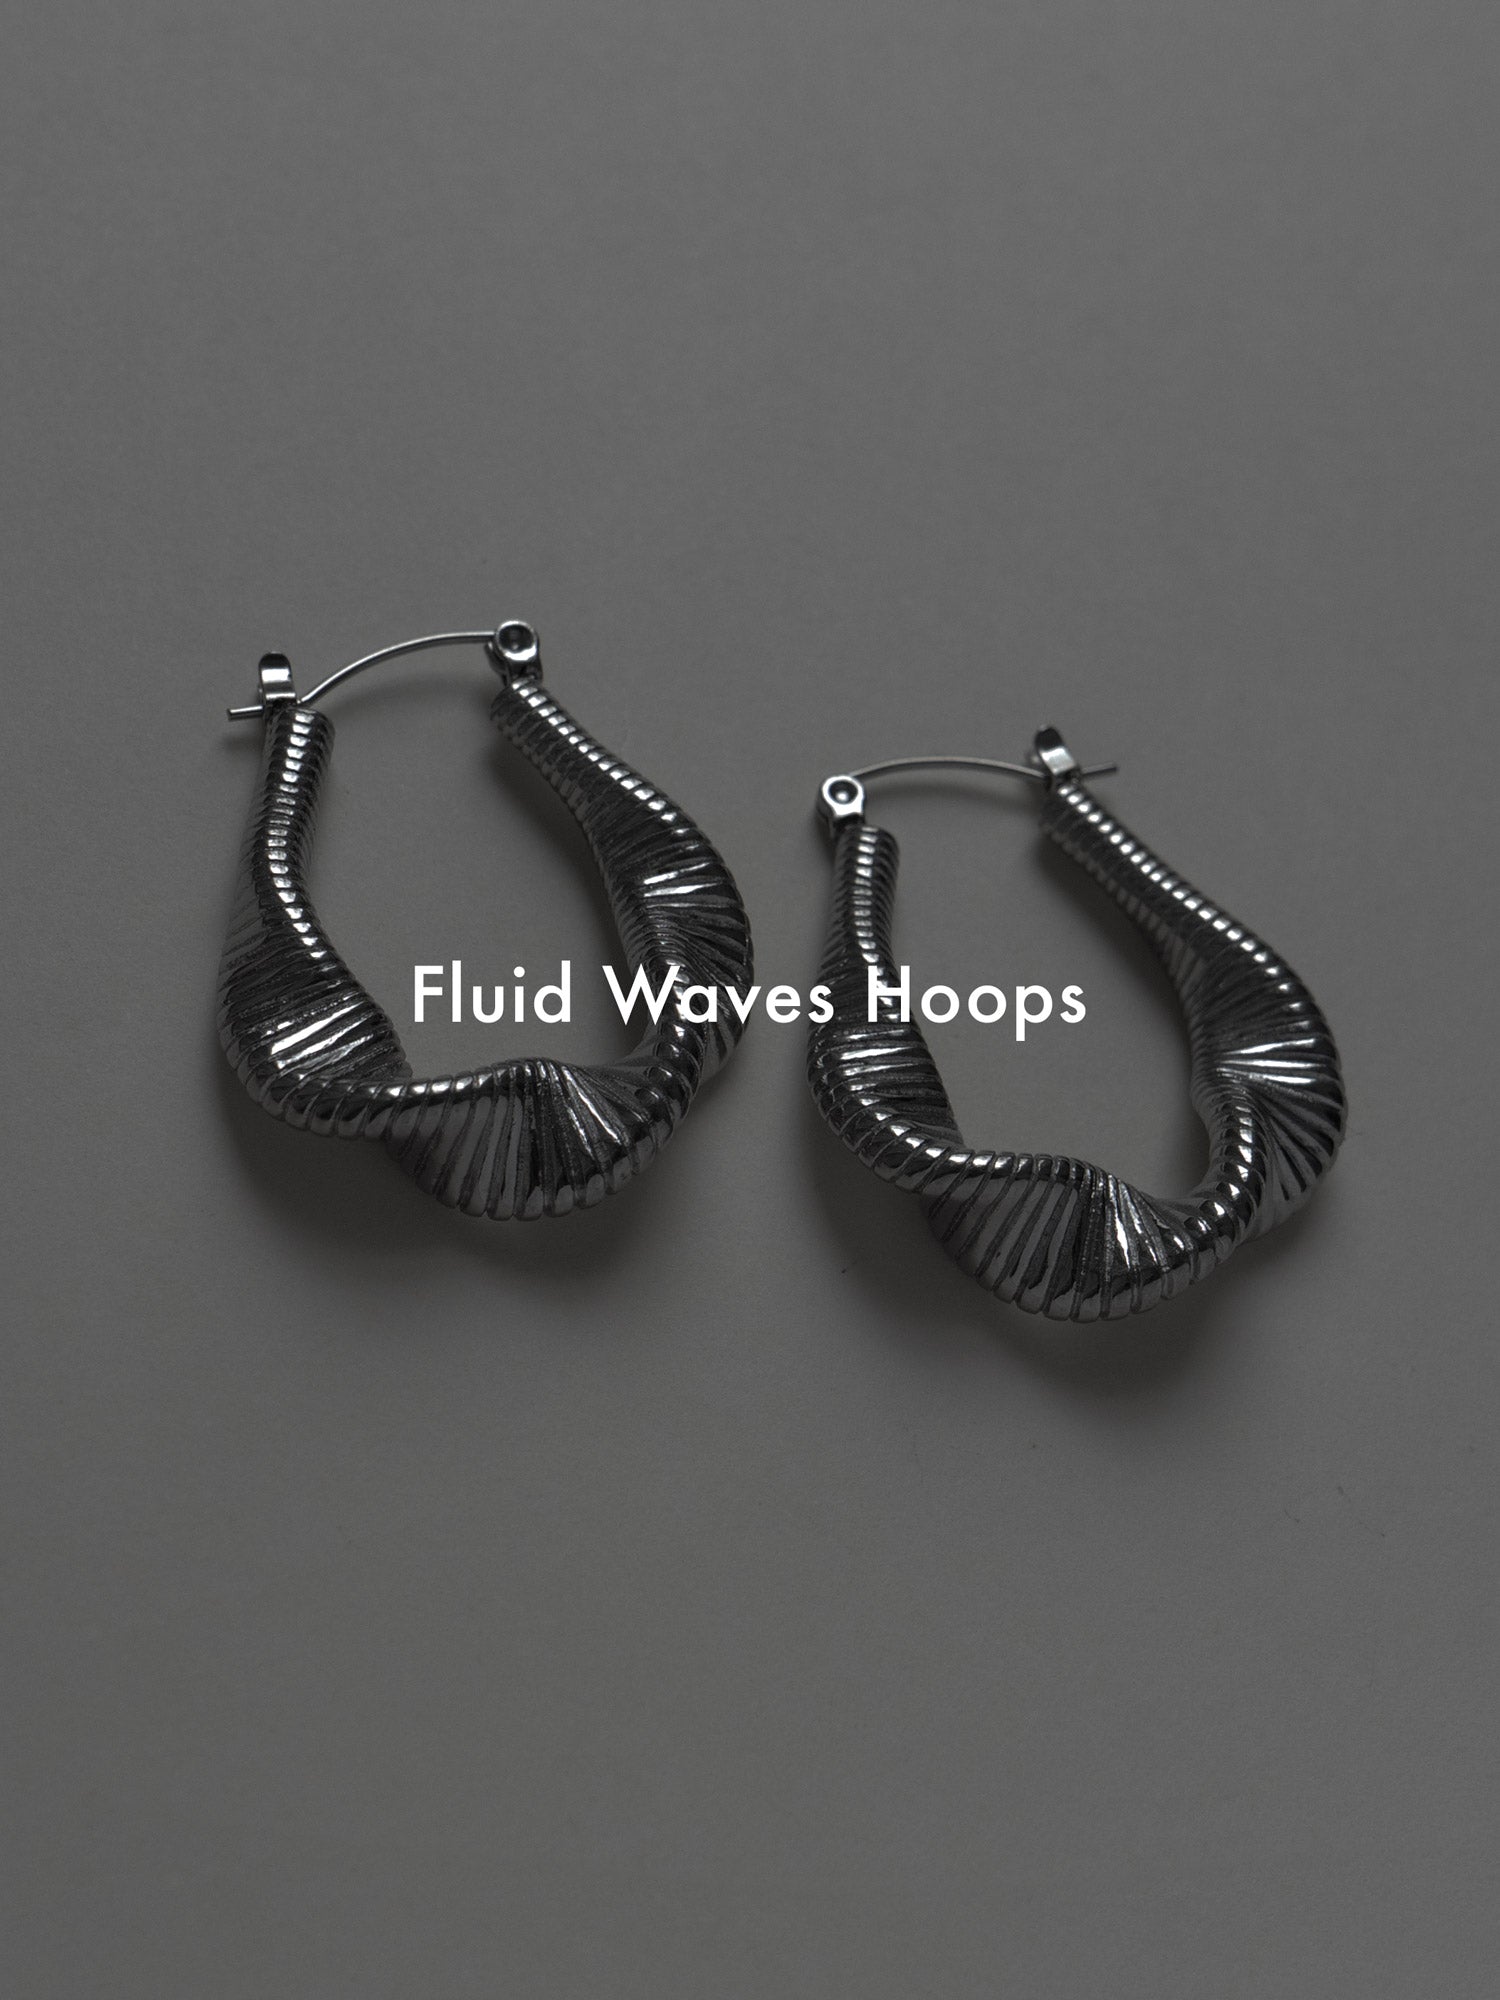 fluid waves hoops silvber6